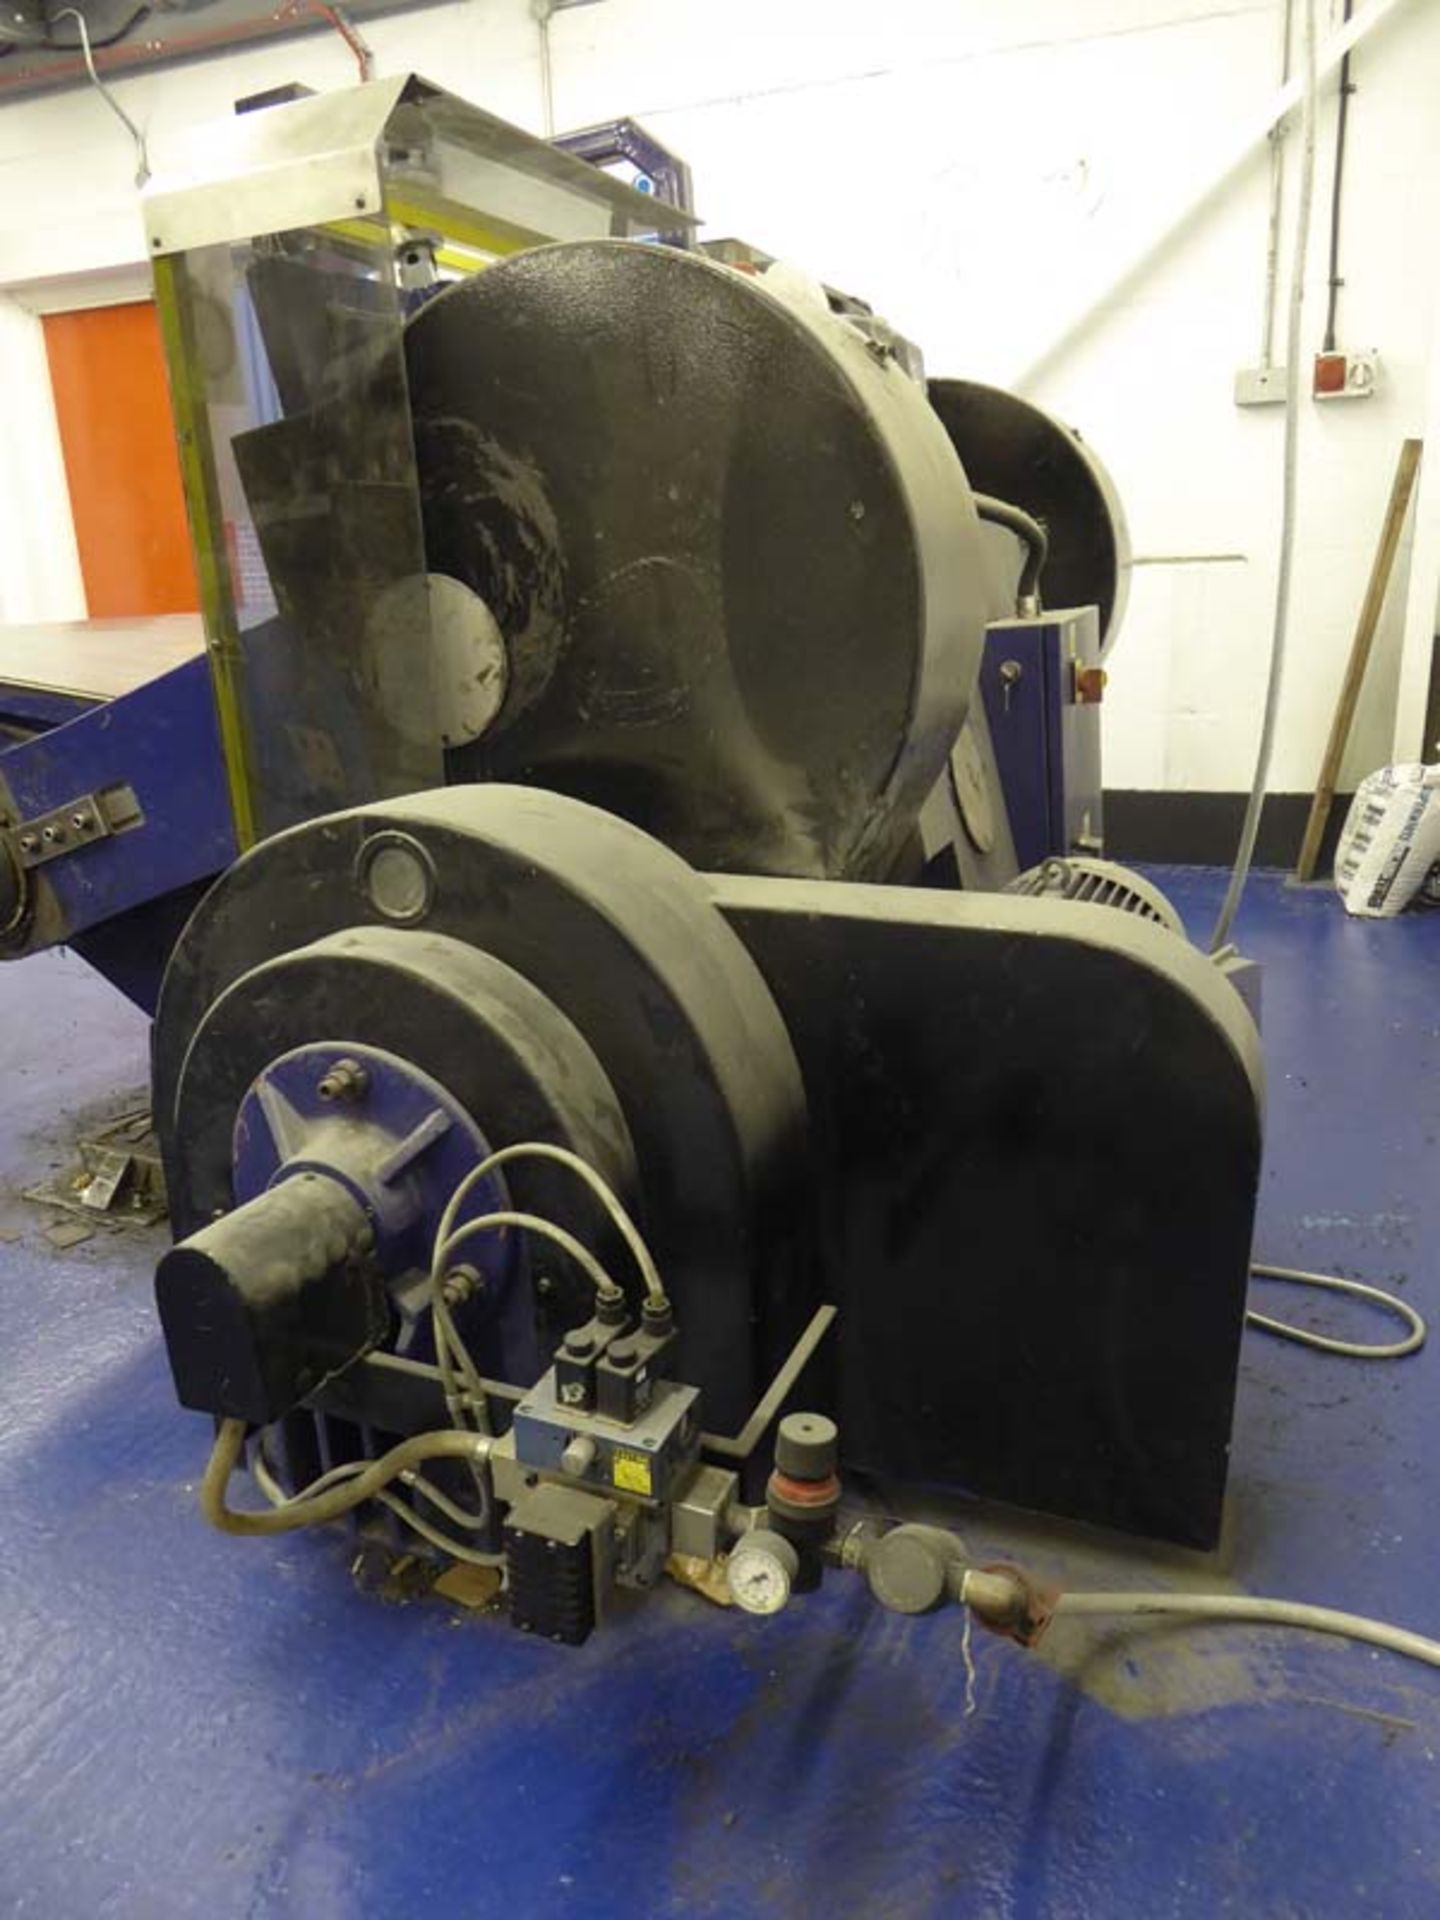 Viking die cutting platen press machine 1330mm x 960mm Model: VK1330 Serial Number: 97171 - Image 4 of 5